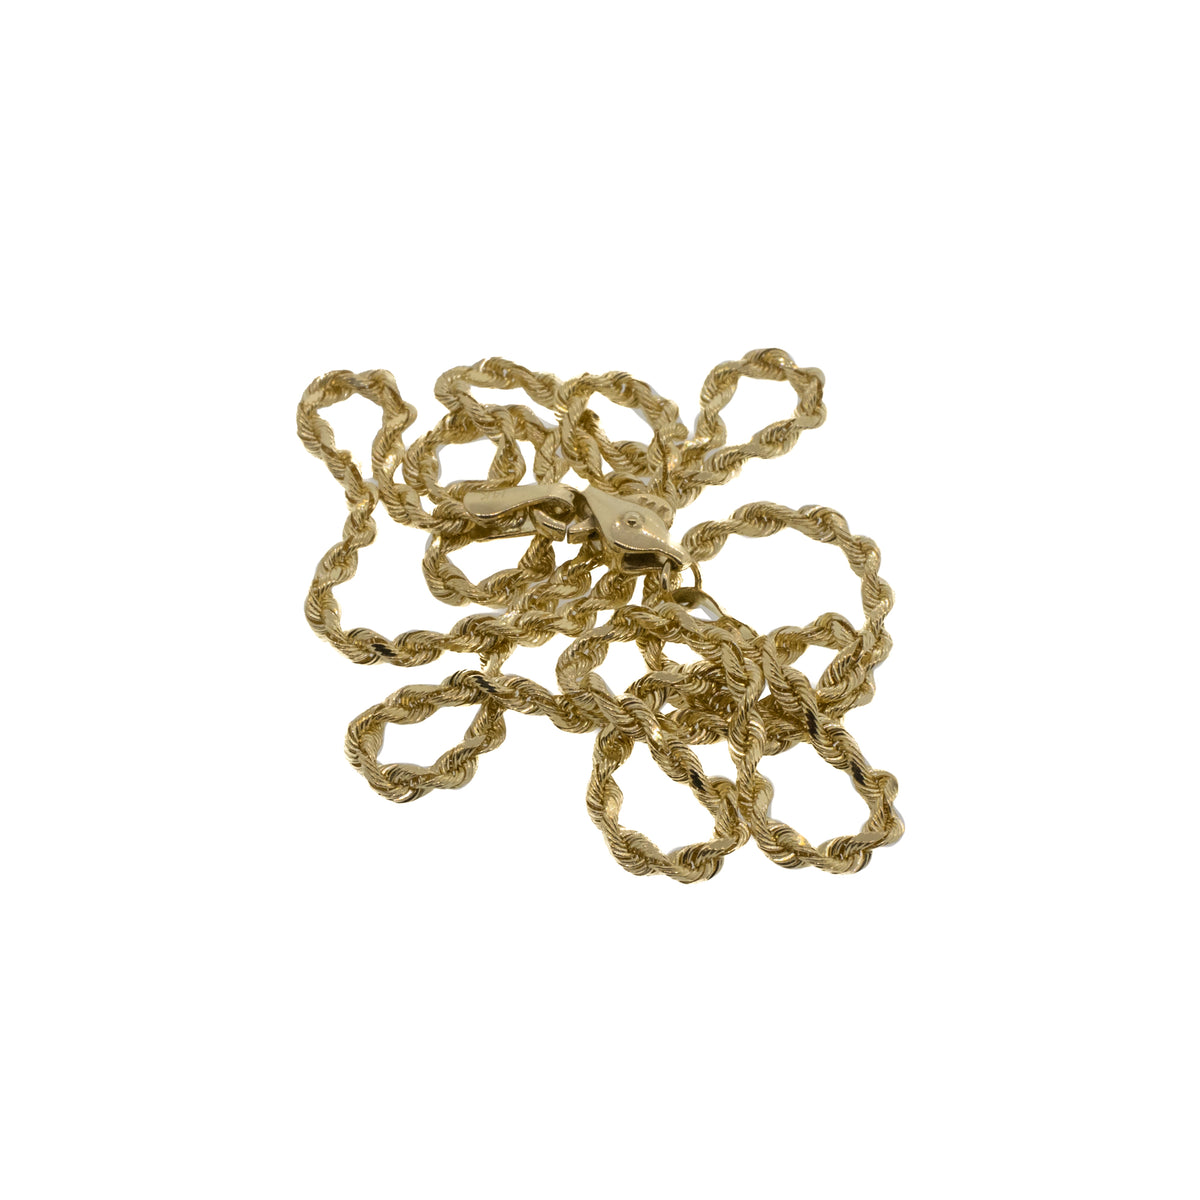 18" Yellow Gold Rope Chain